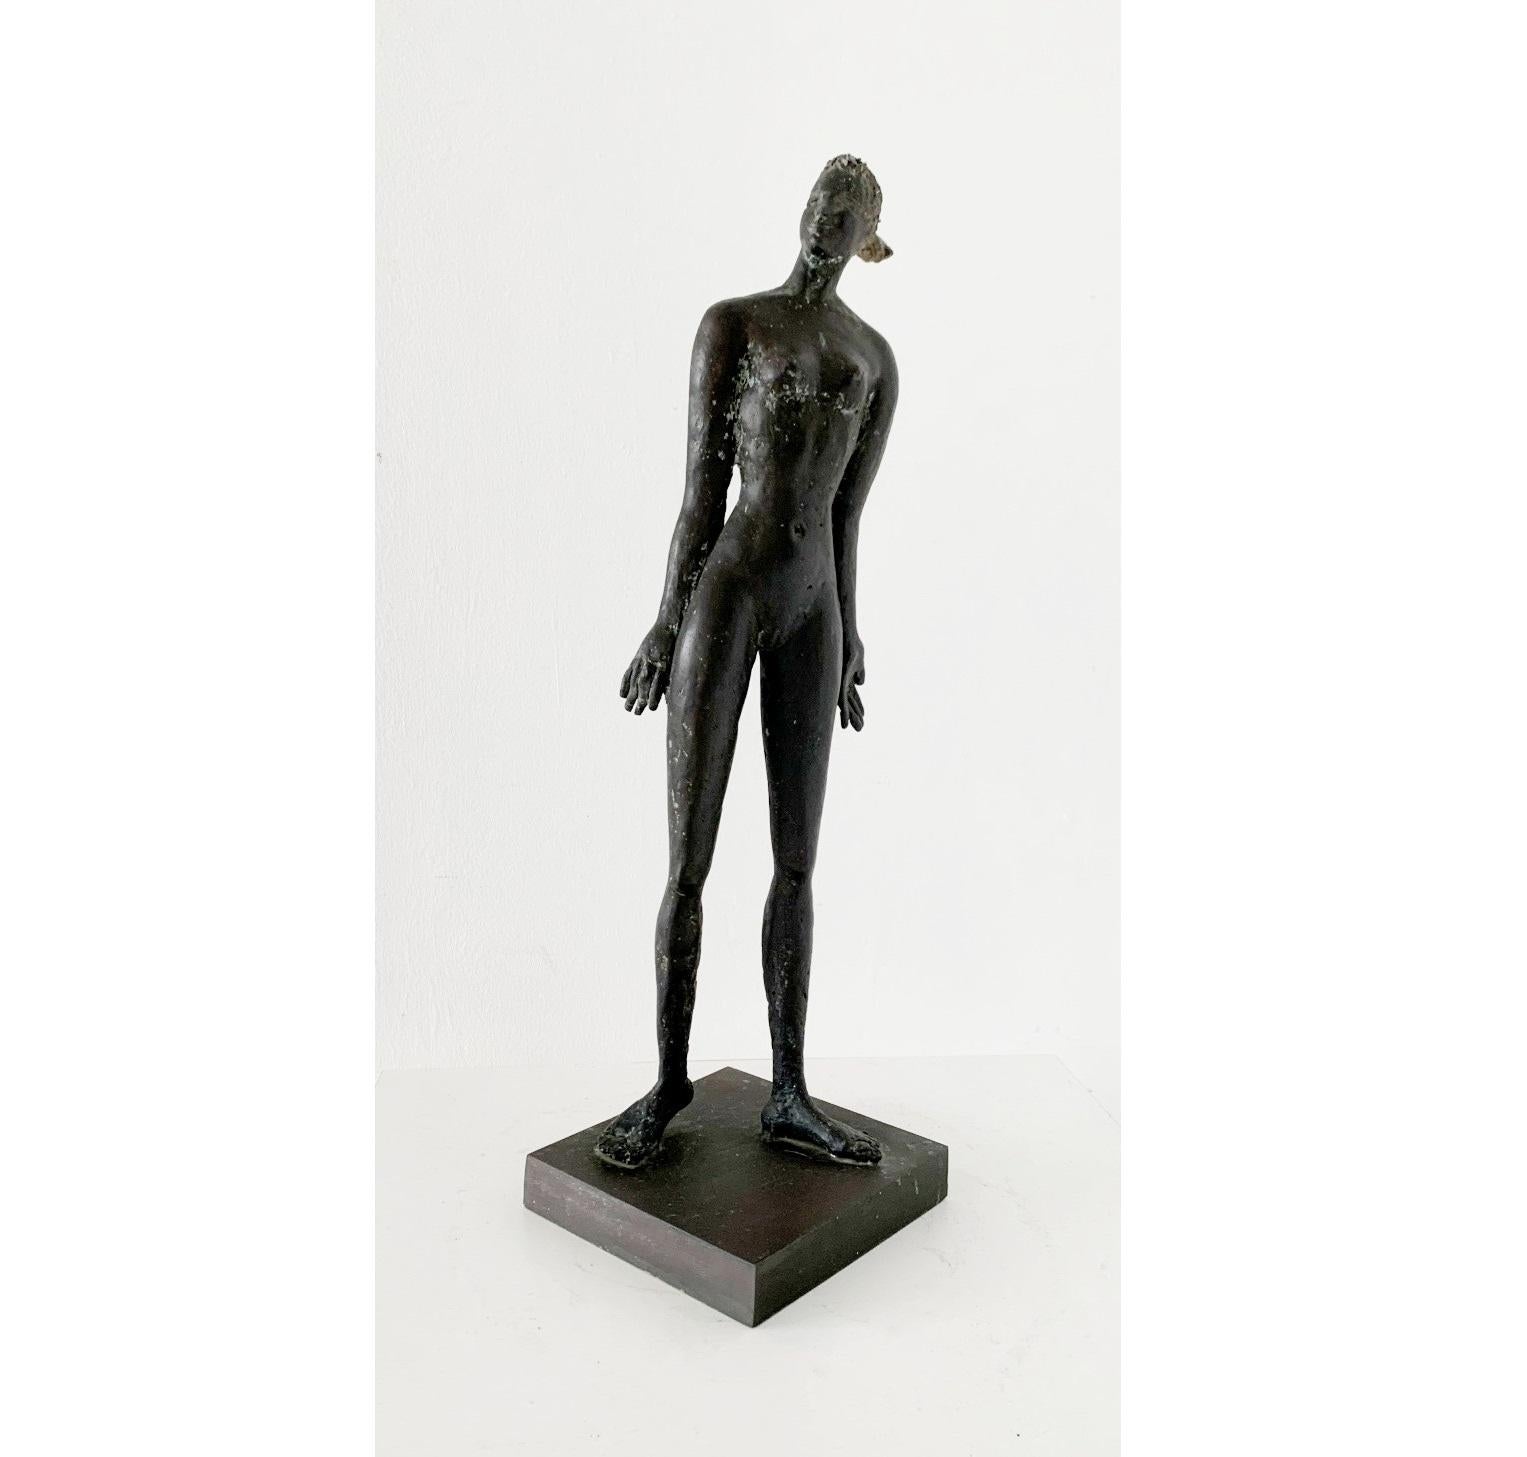 Giuseppe del Debbio Figurative Sculpture - A woman.. Contemporary figurative bronze sculpture, Female nude, Italian artist